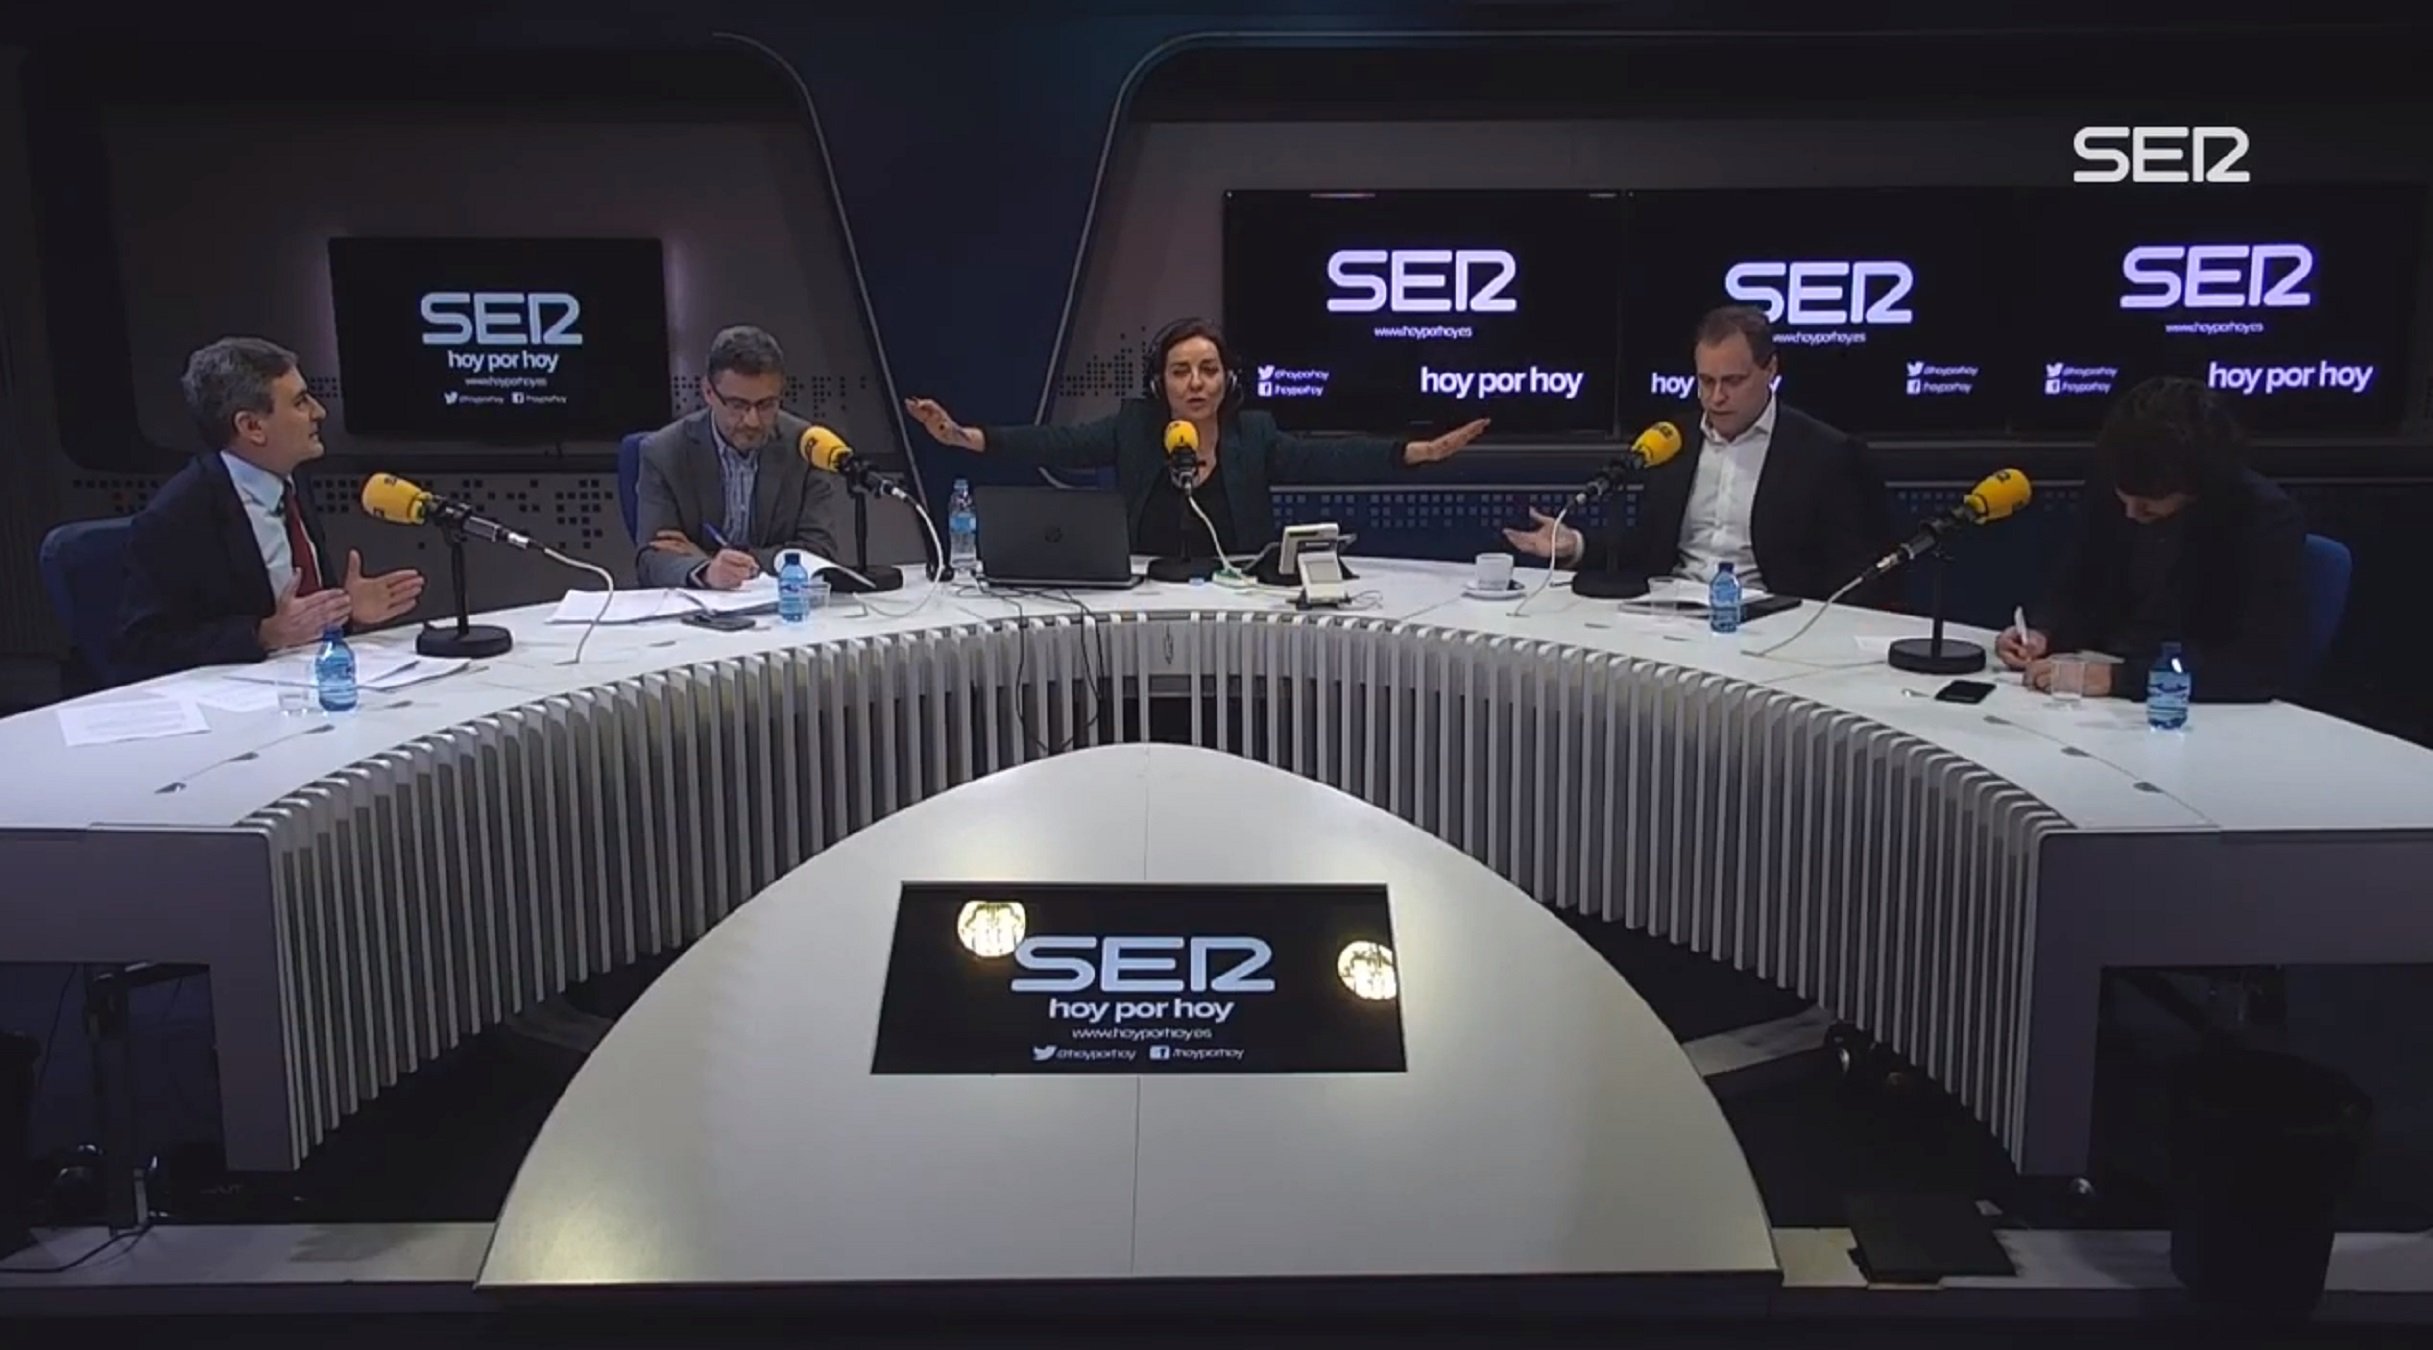 VÍDEO: Ignominiós debat polític a la SER, amb Pepa Bueno irada: "Cortad micros!"